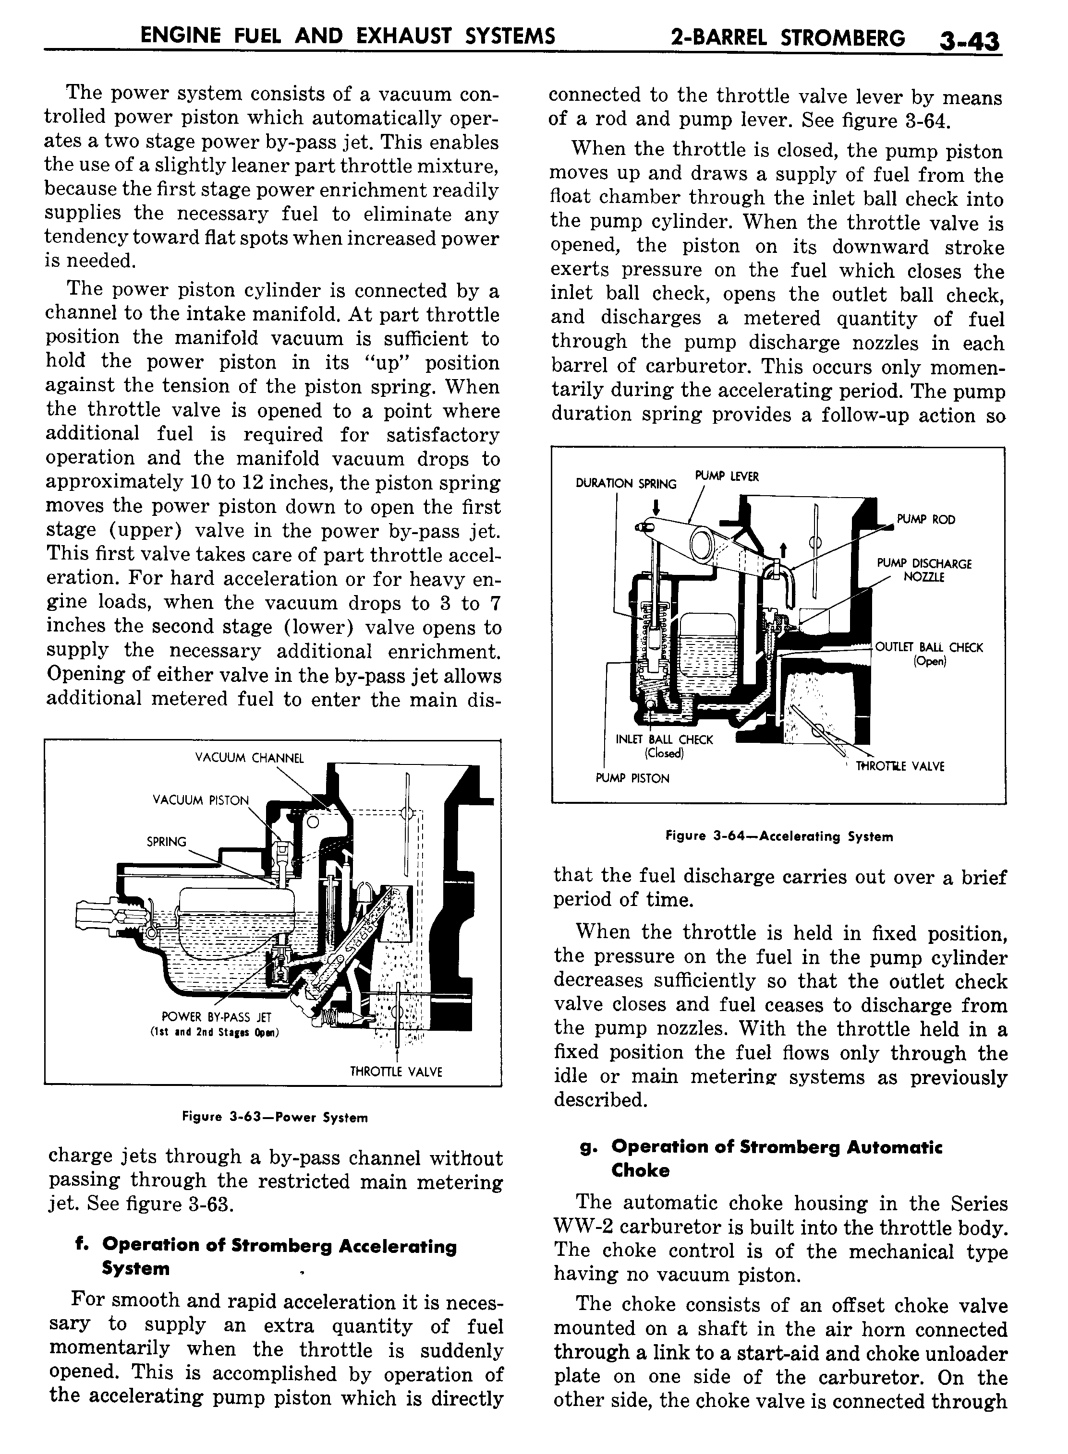 n_04 1960 Buick Shop Manual - Engine Fuel & Exhaust-043-043.jpg